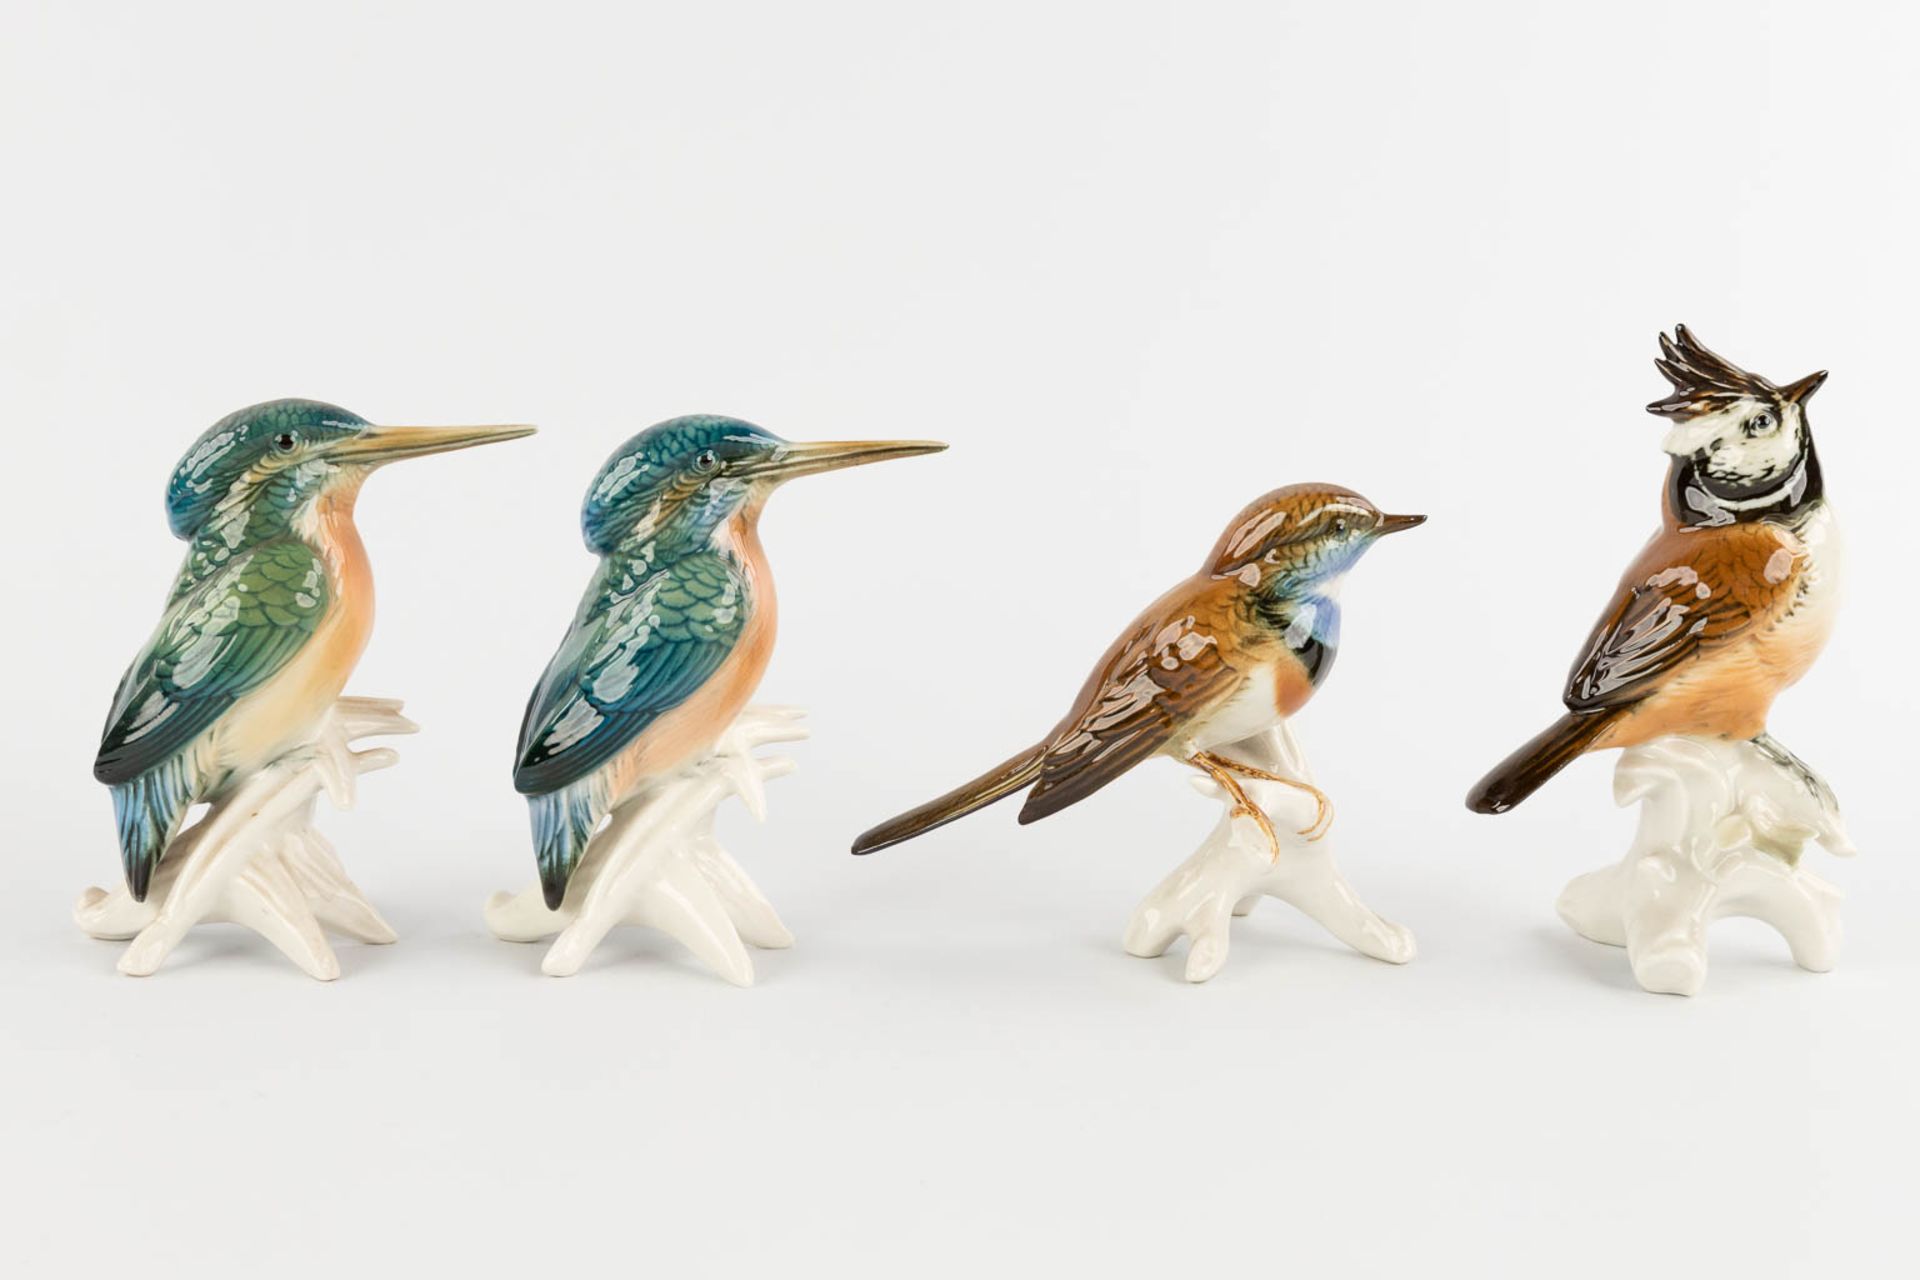 Karl ENS Porzellan, 8 birds, polychrome porcelain. 20th C. (H:19 cm) - Image 10 of 15